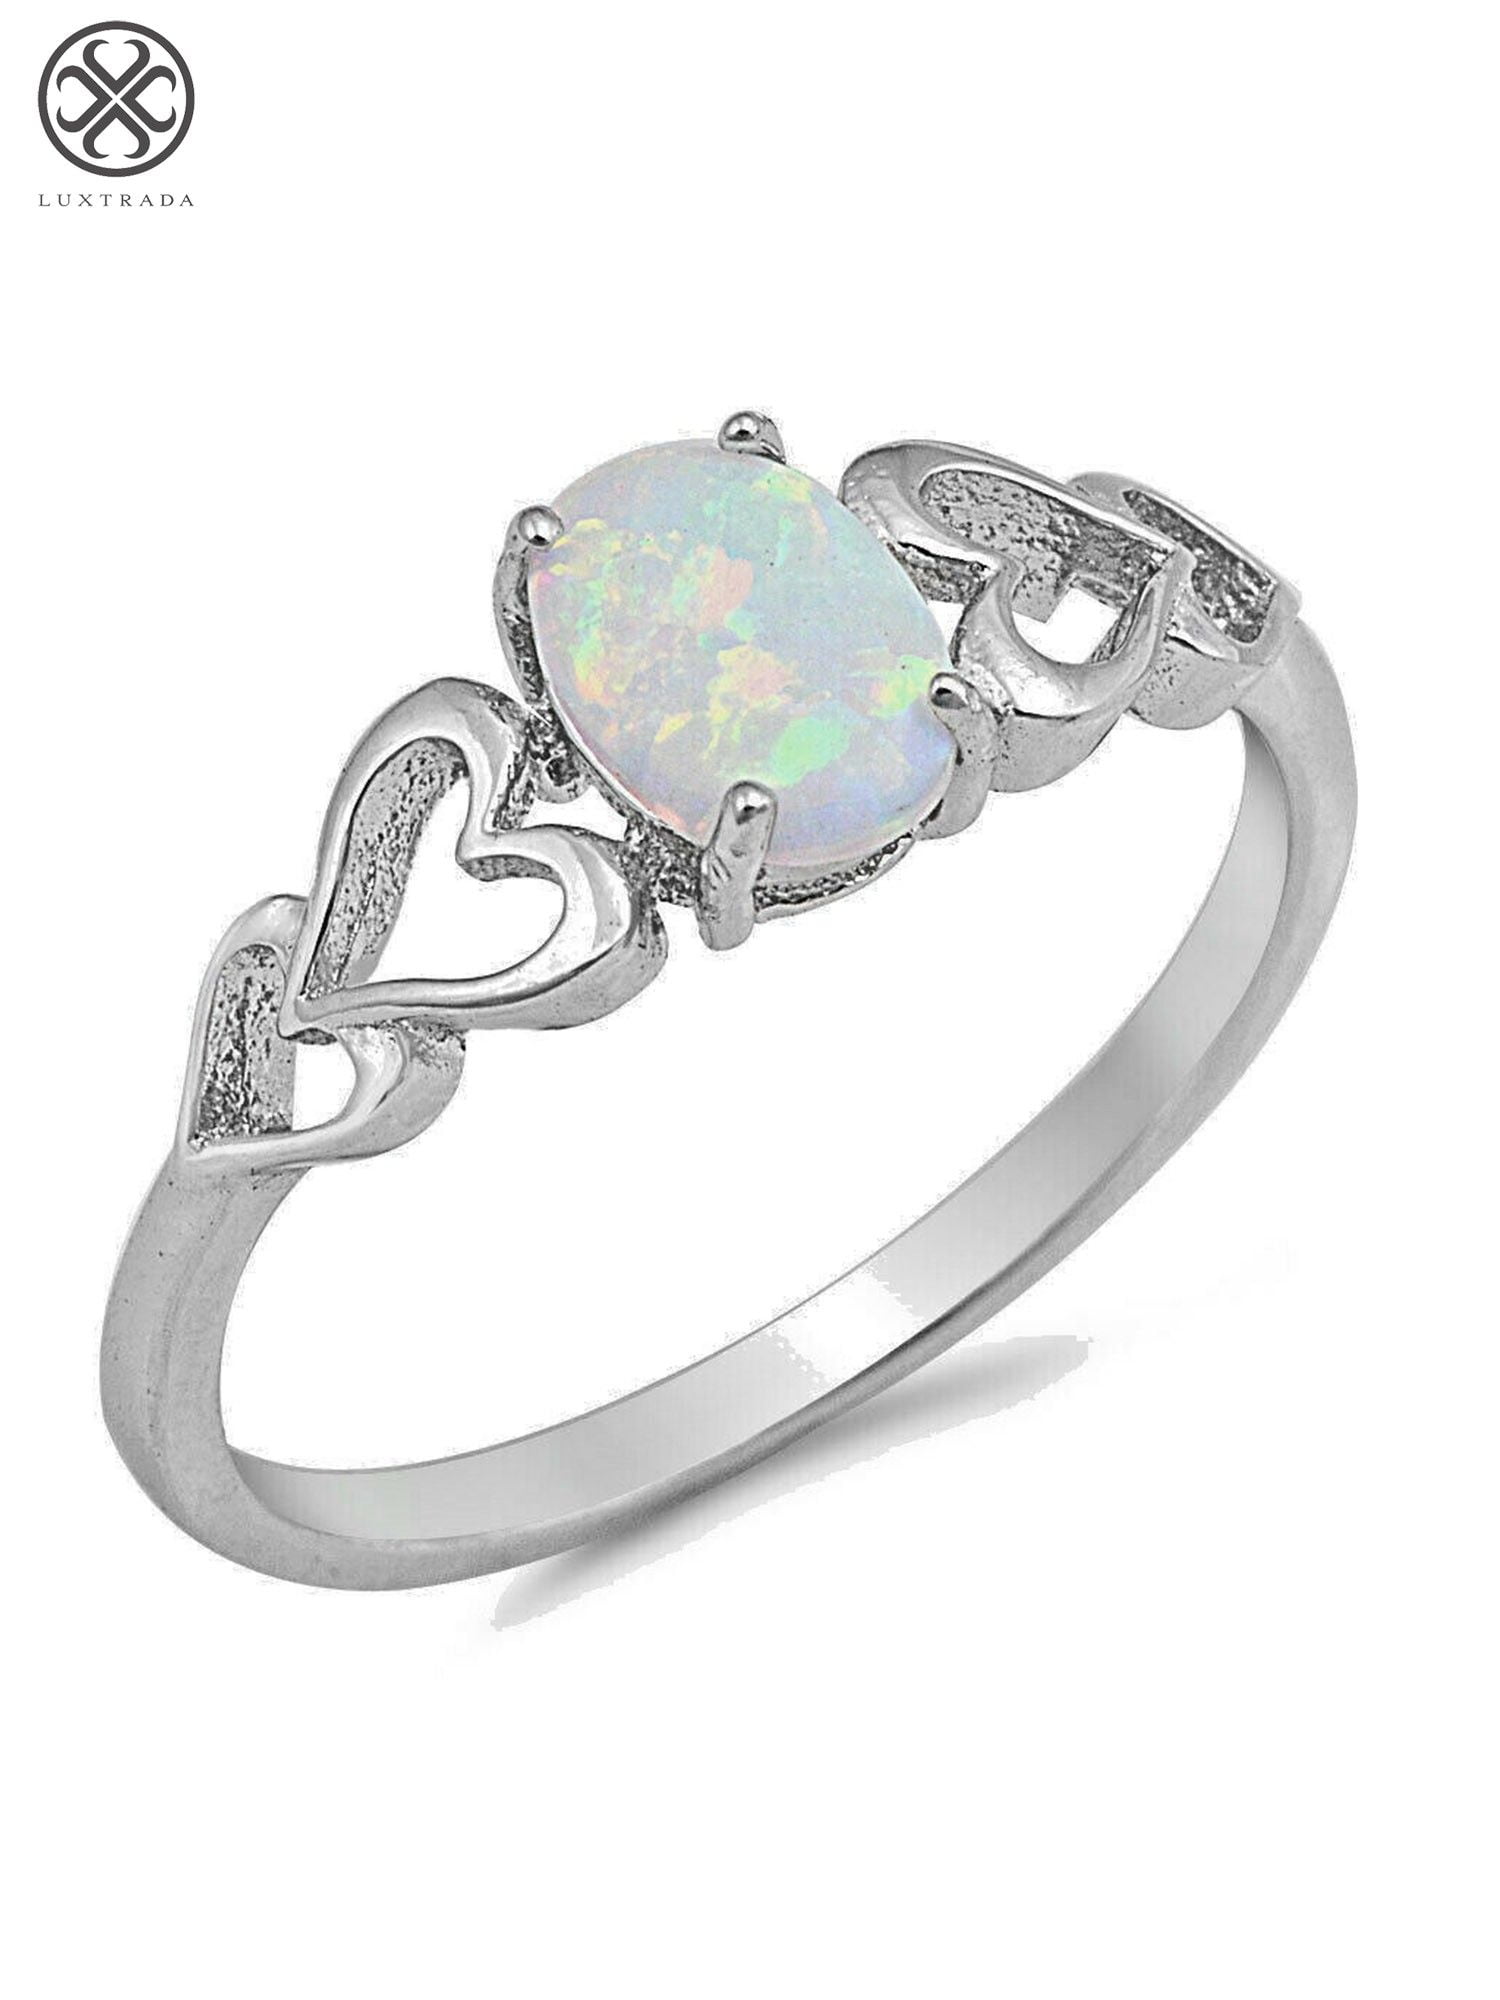 Fashion woman 925 Silver White Fire Opal CZ Crystal Wedding Ring Size 6 7 8 9 10 